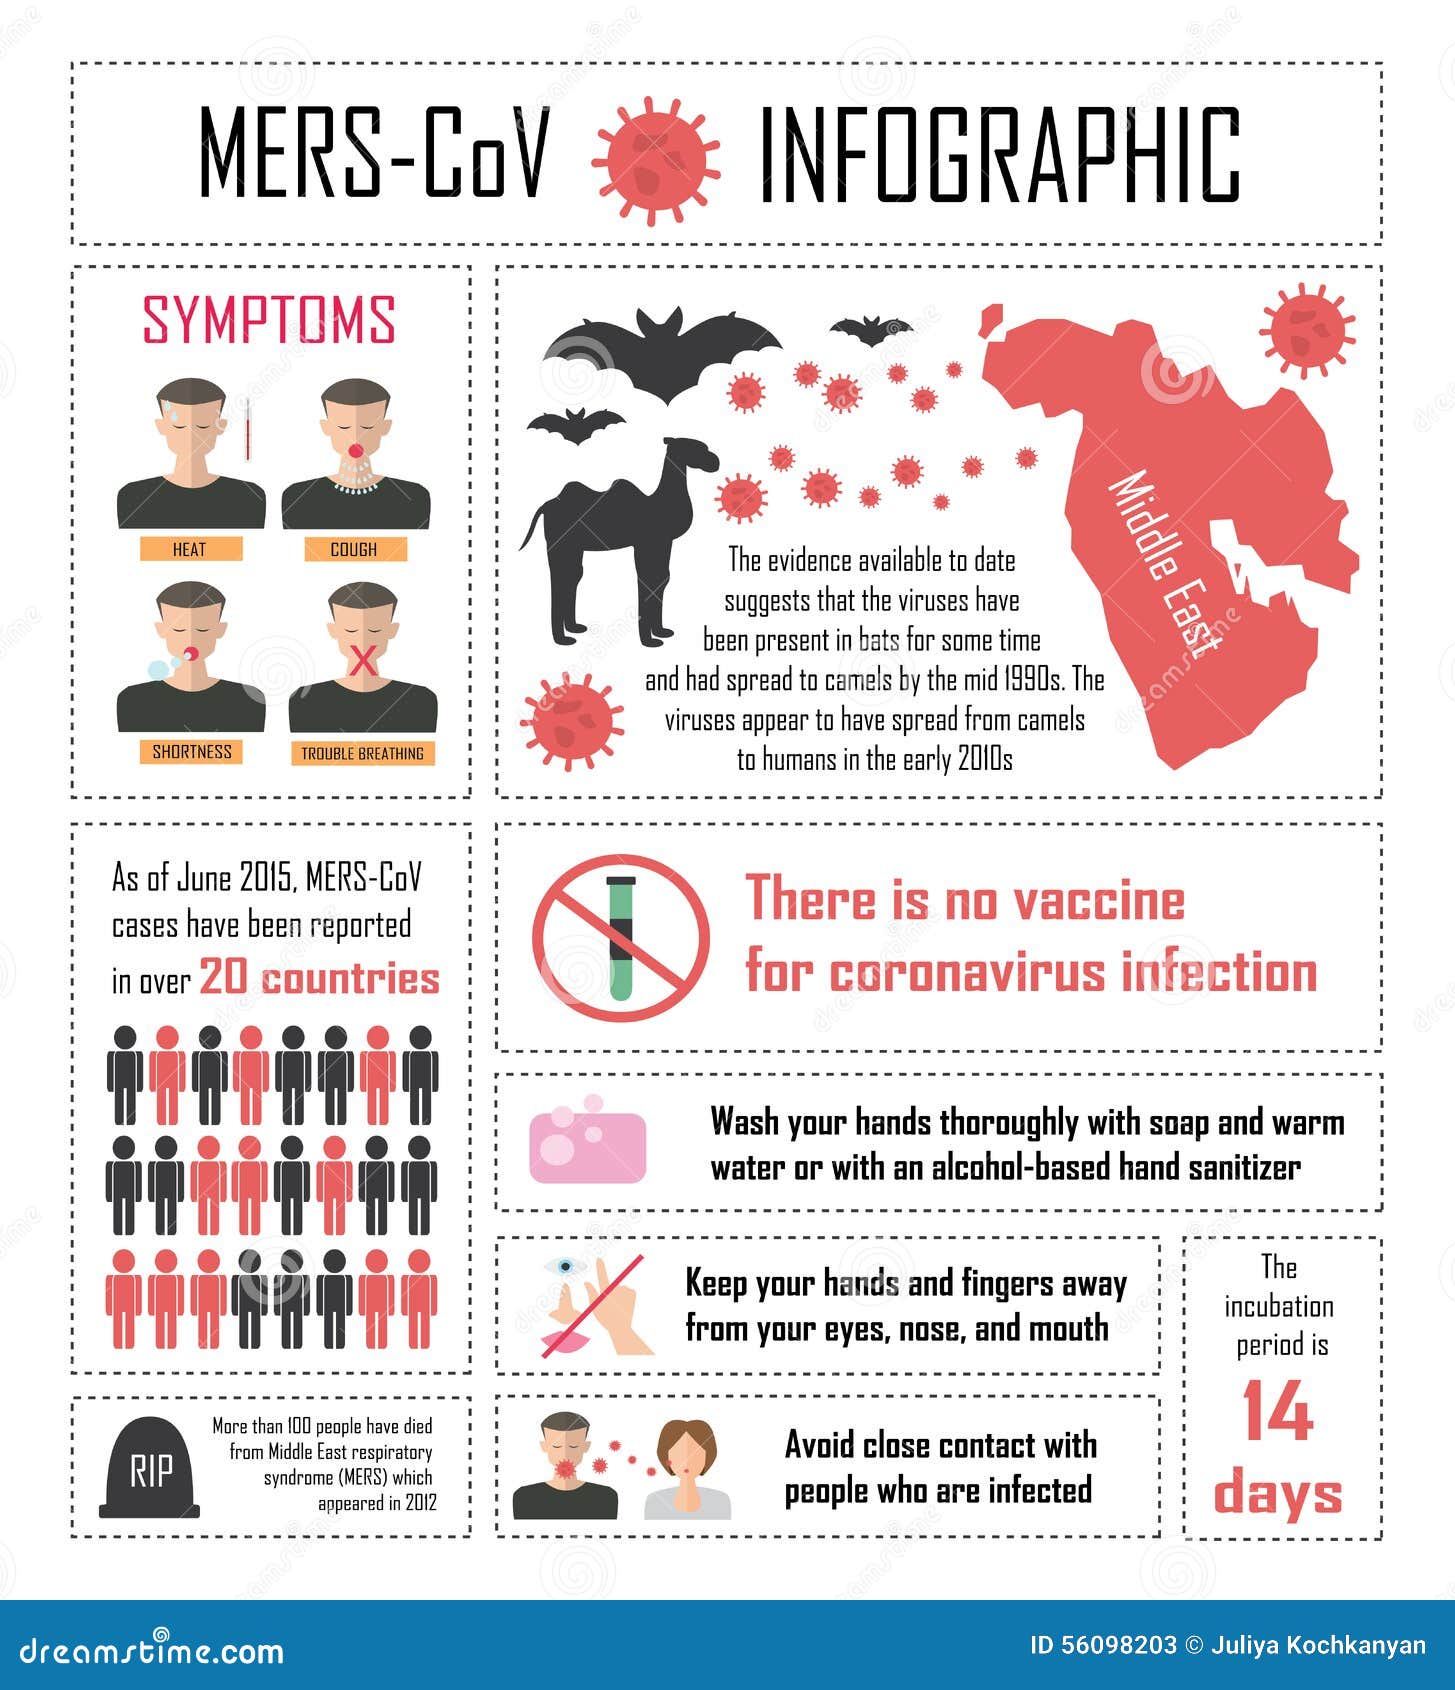 Flu Symptoms Infographics Vector Illustration | CartoonDealer.com #726645601272 x 1300